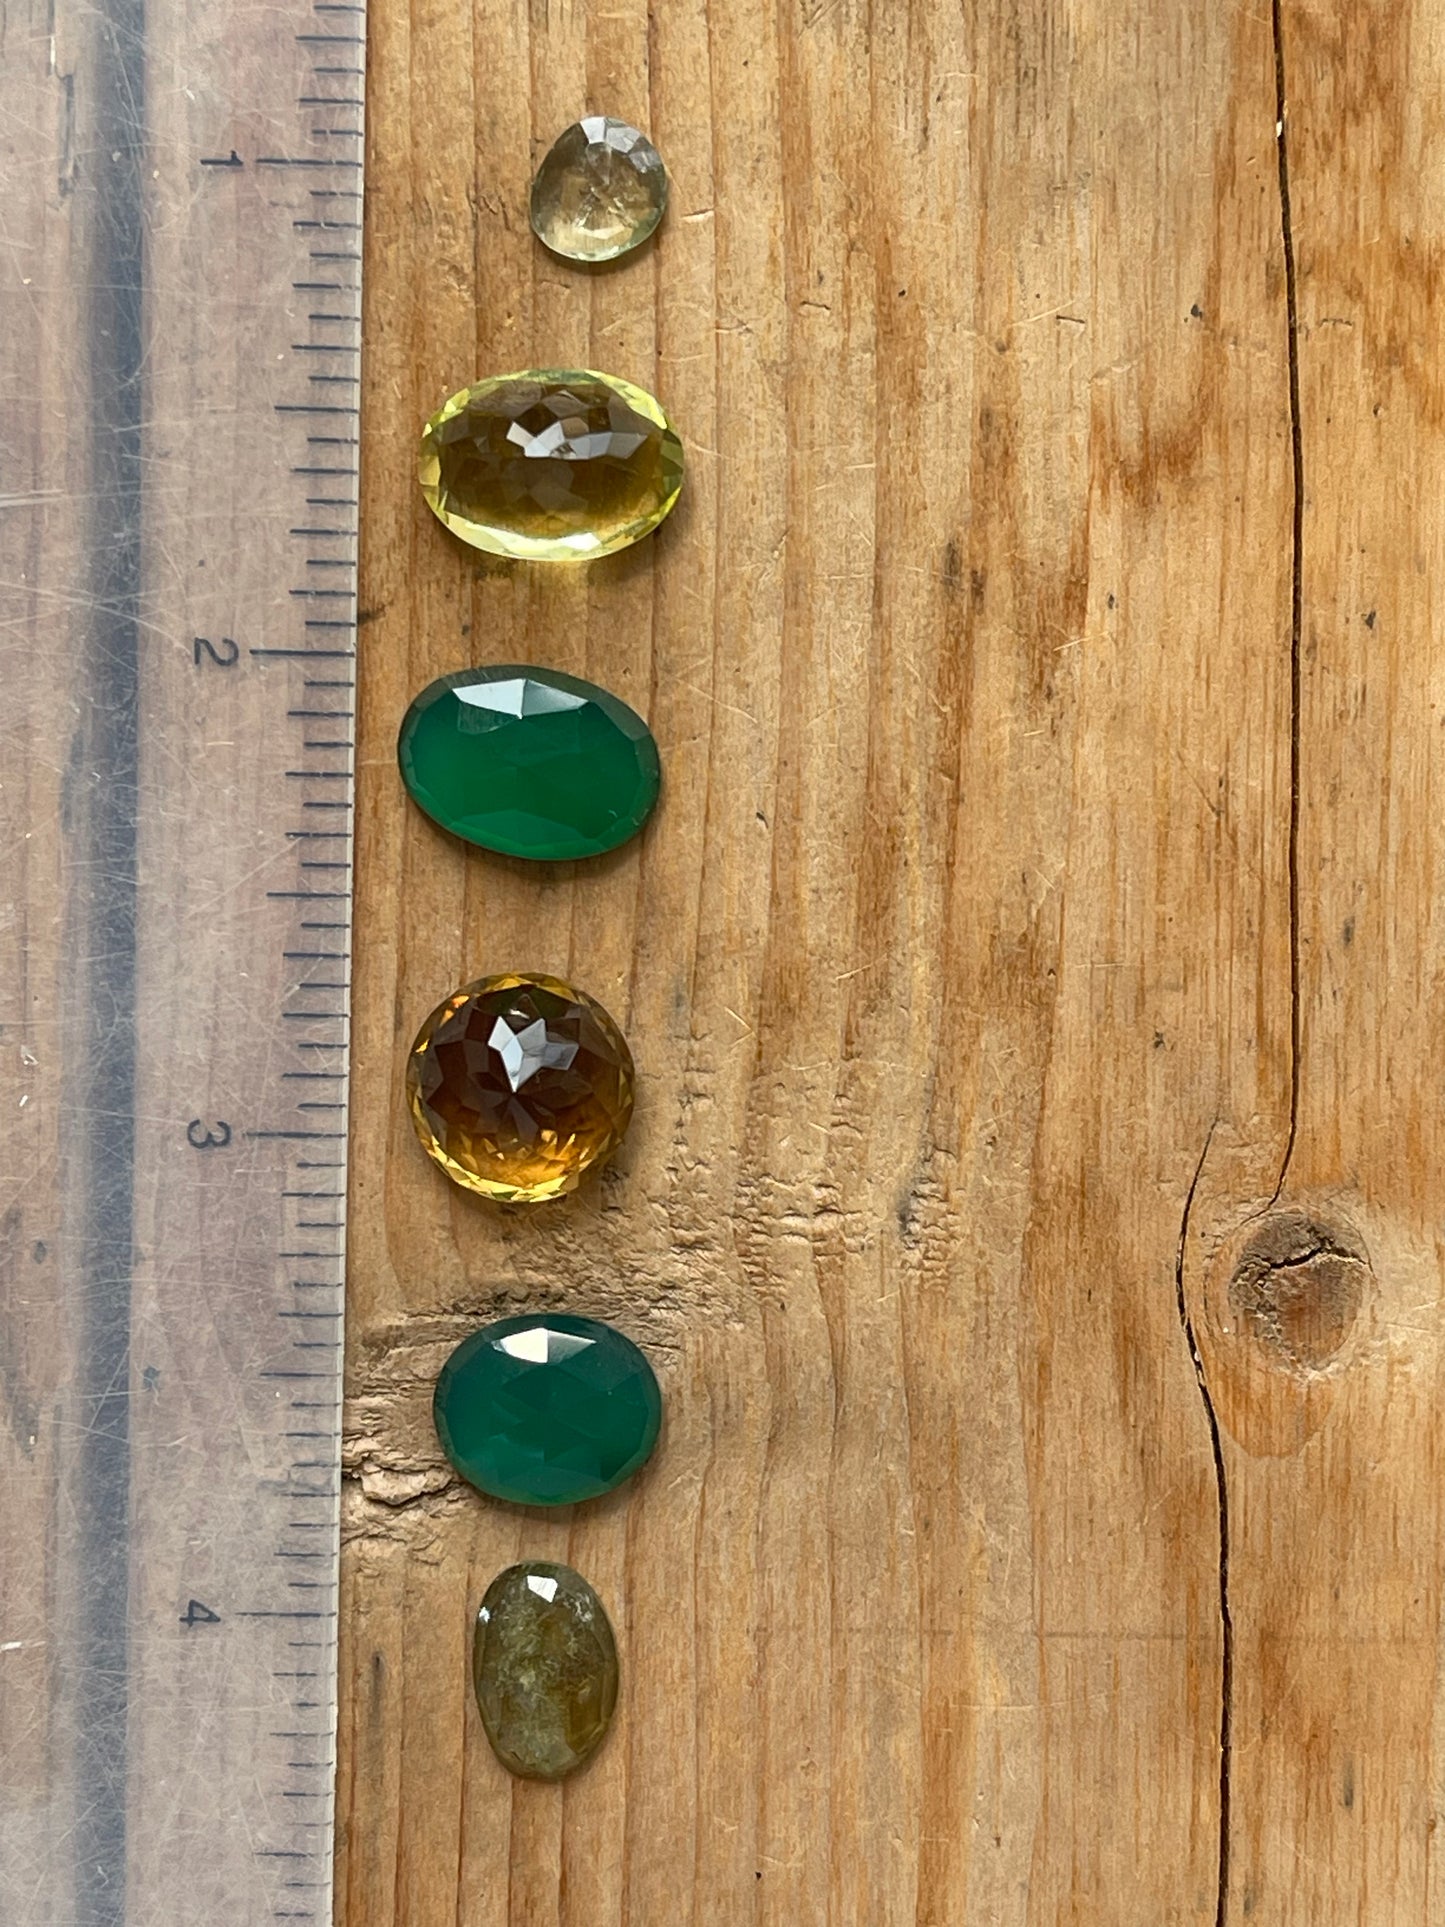 Gemstone Collection 71: Green Onyx, Lemon Quartz, Citrine, Green Amethyst - 22CT